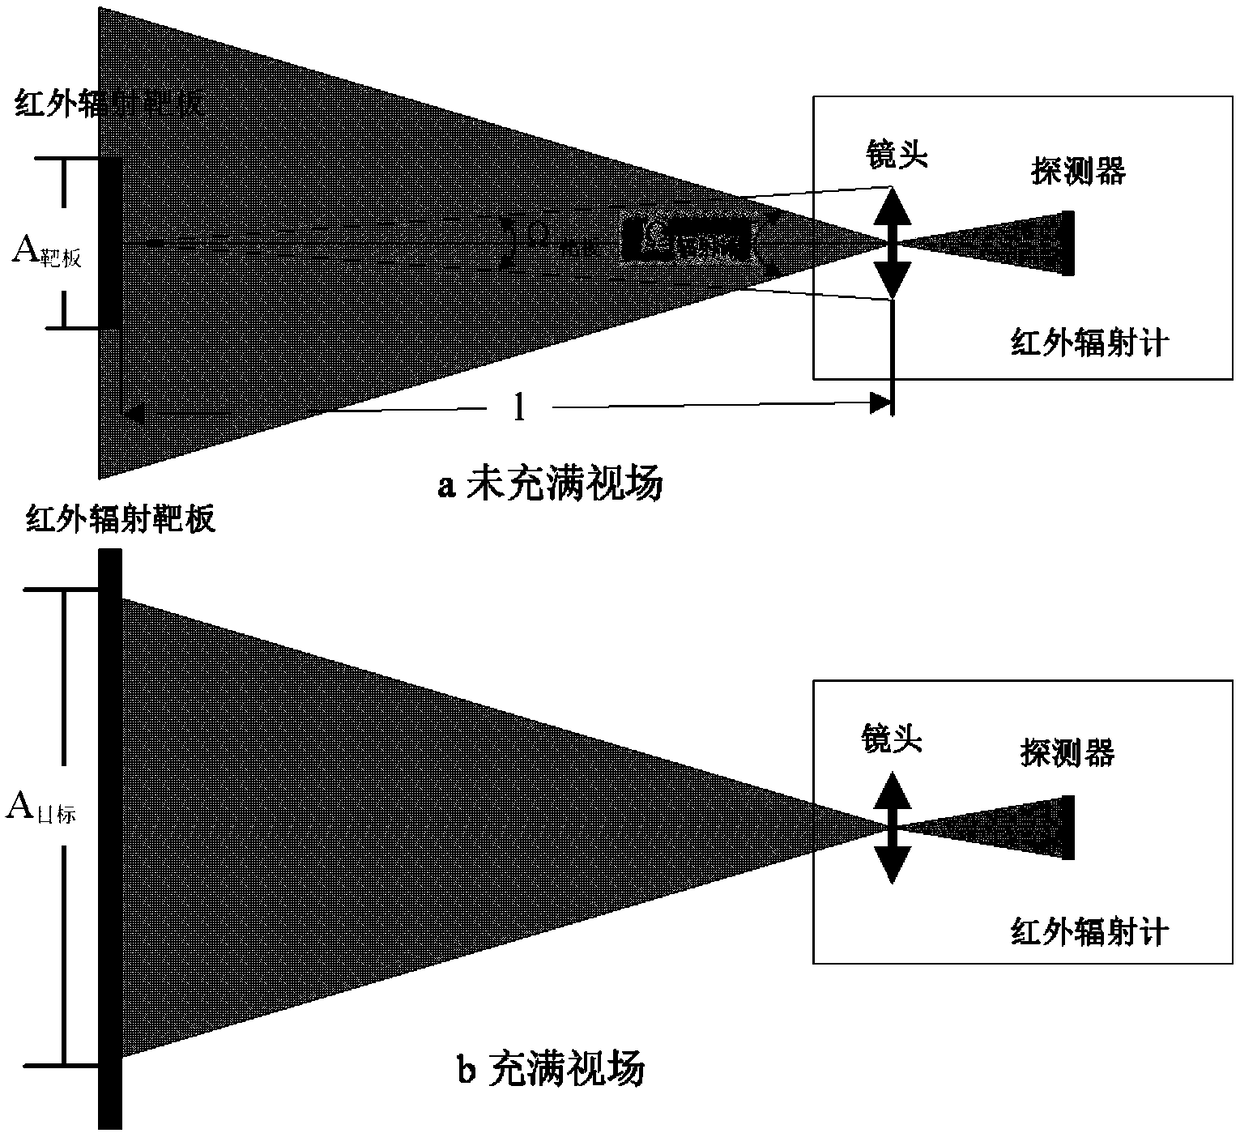 Evaluation method for horizontal infrared atmospheric spectrum transmittance